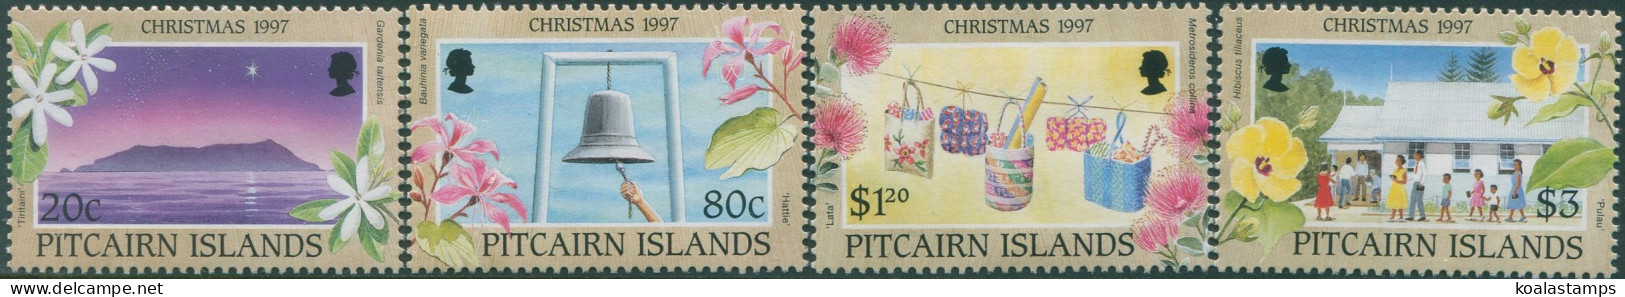 Pitcairn Islands 1997 SG522-525 Christmas Set MNH - Pitcairn